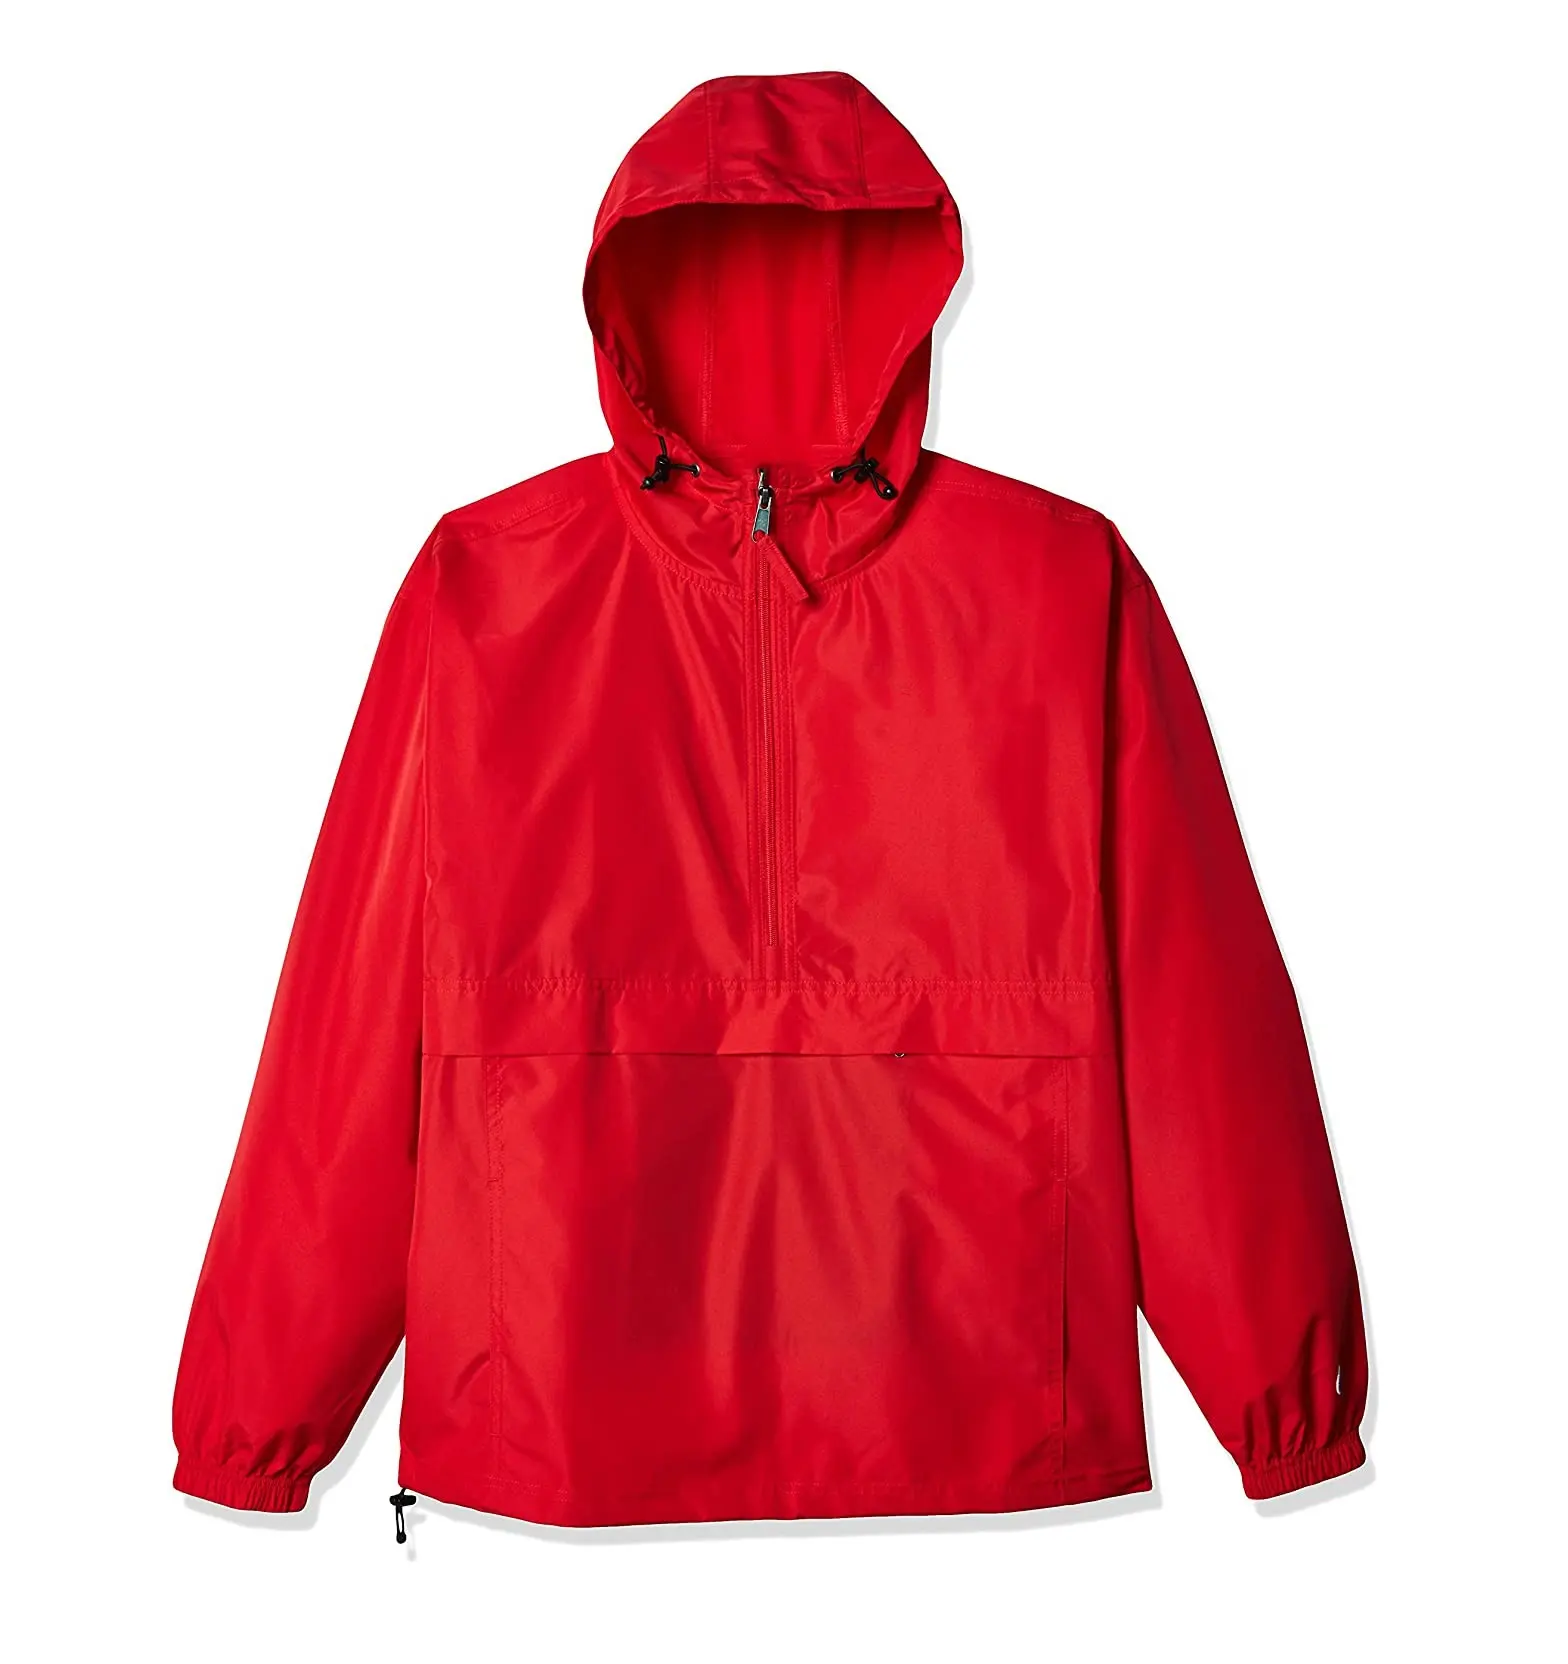 Red big pocket hoodie sport coat for men plus size men's jackets